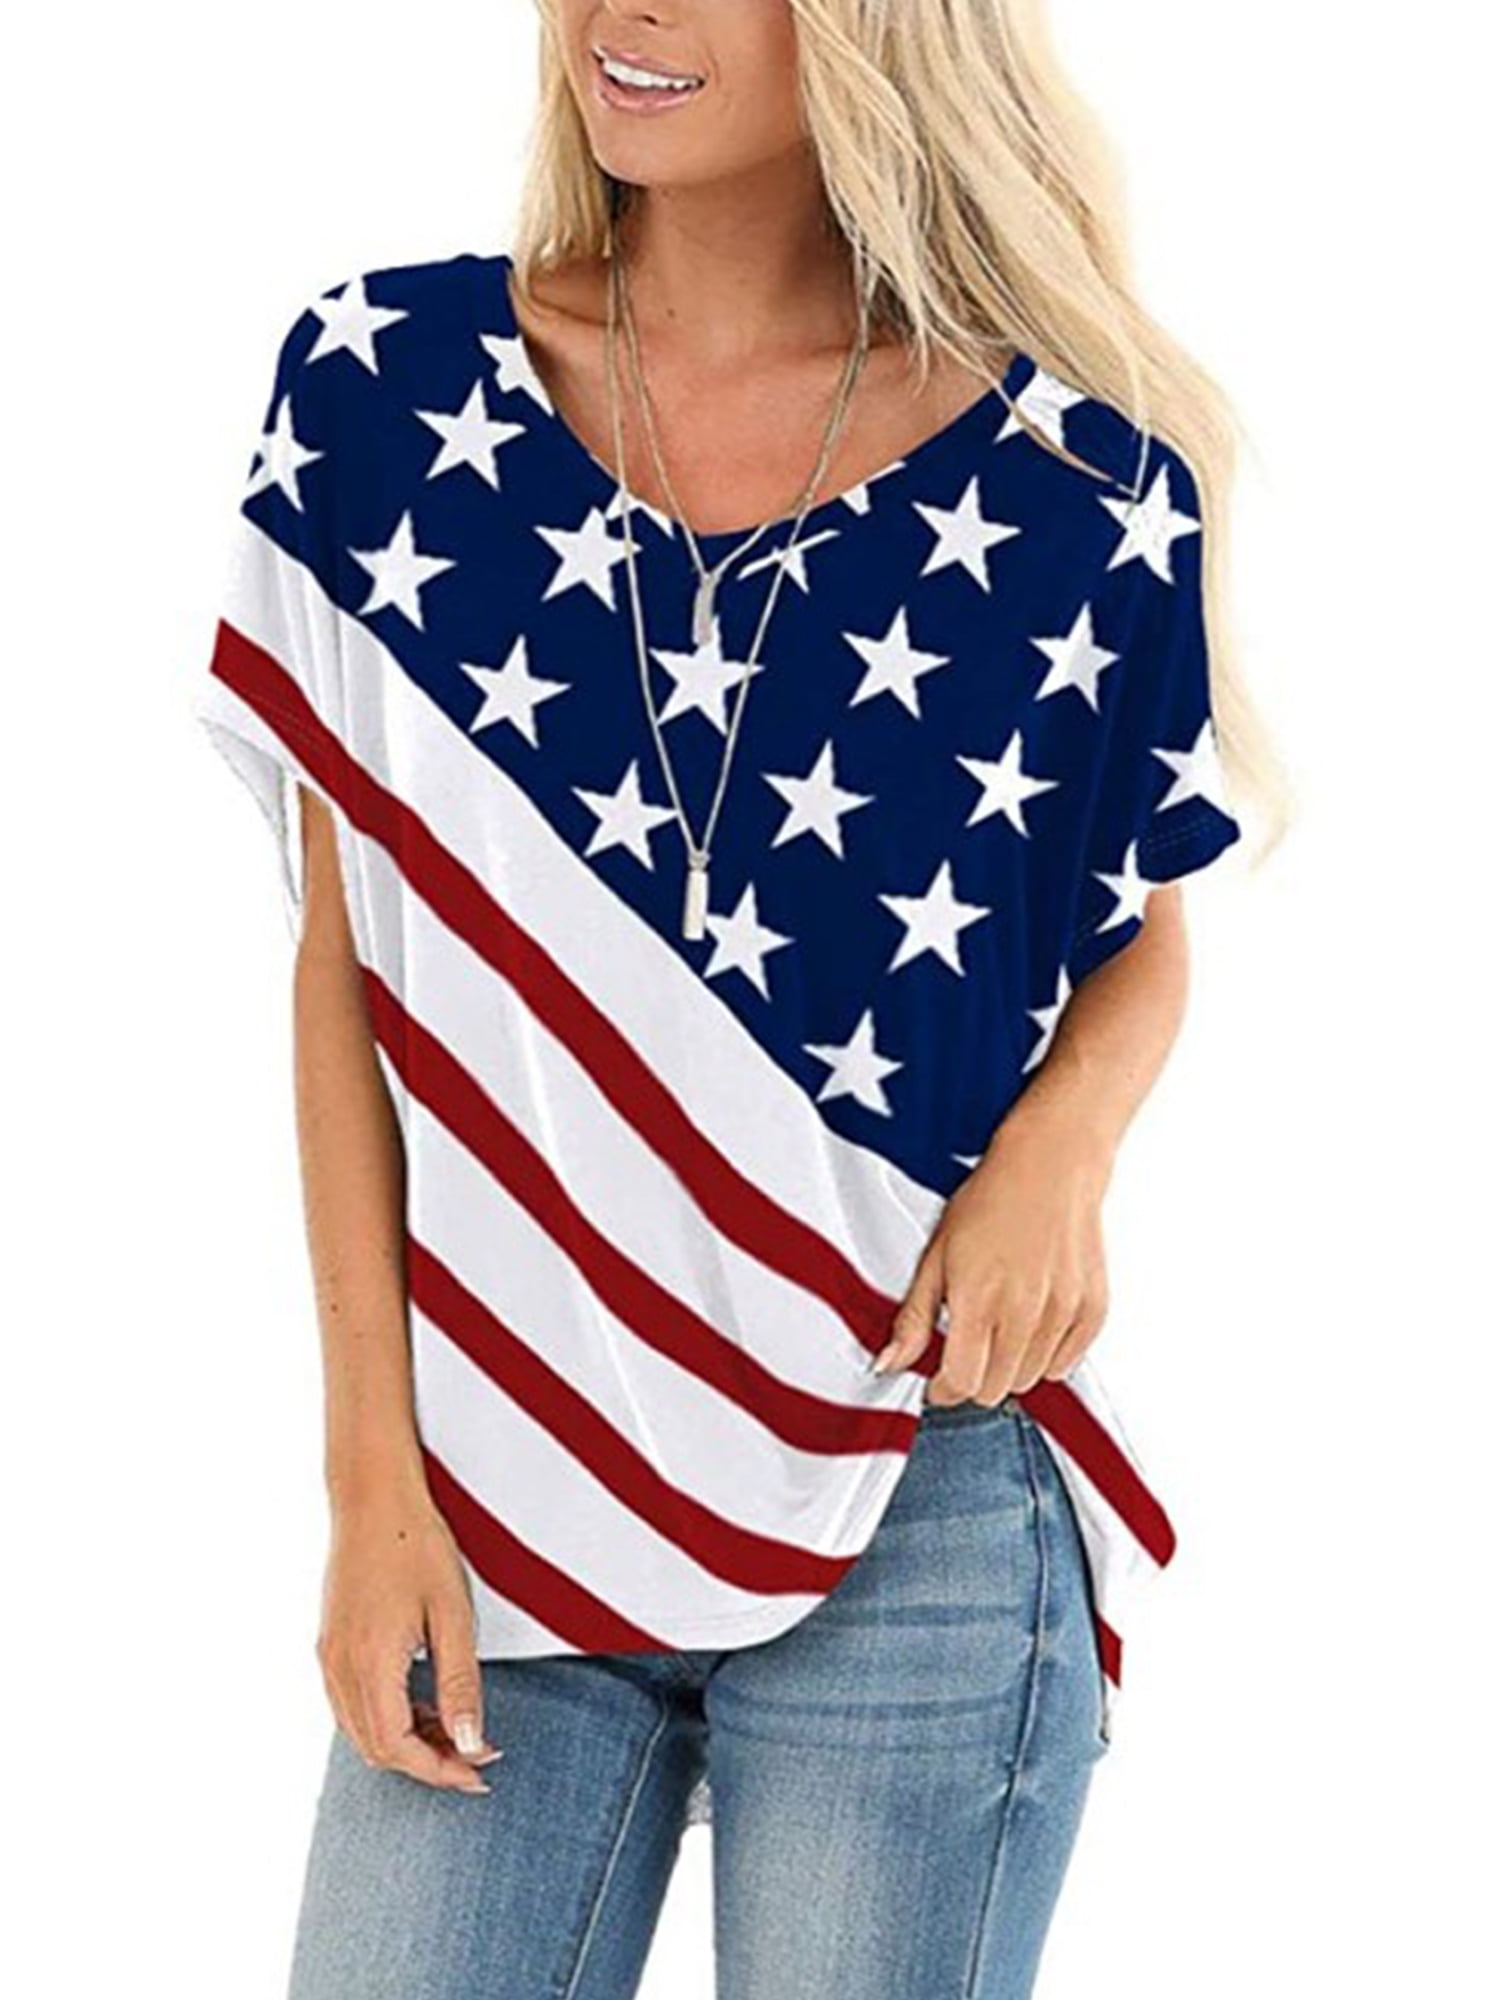 LookGolden Womens American Flag T-Shirt July 4th USA Flag Short Sleeve Tops Summer Casual Tee Shirt